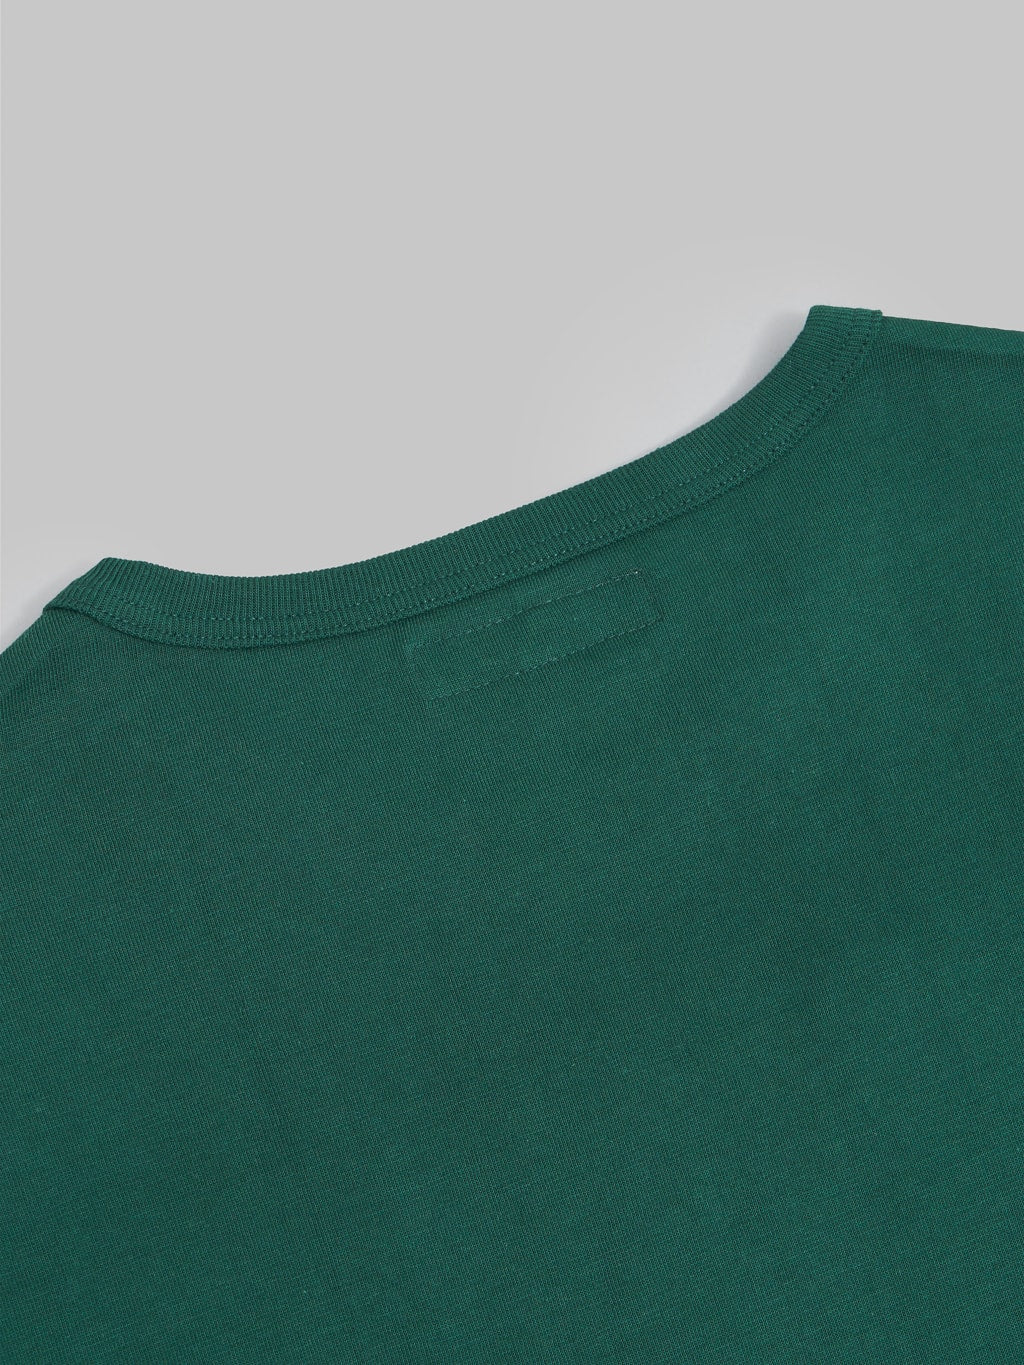 Merz b Schwanen 1950s Loopwheeled Classic TShirt green  stitching